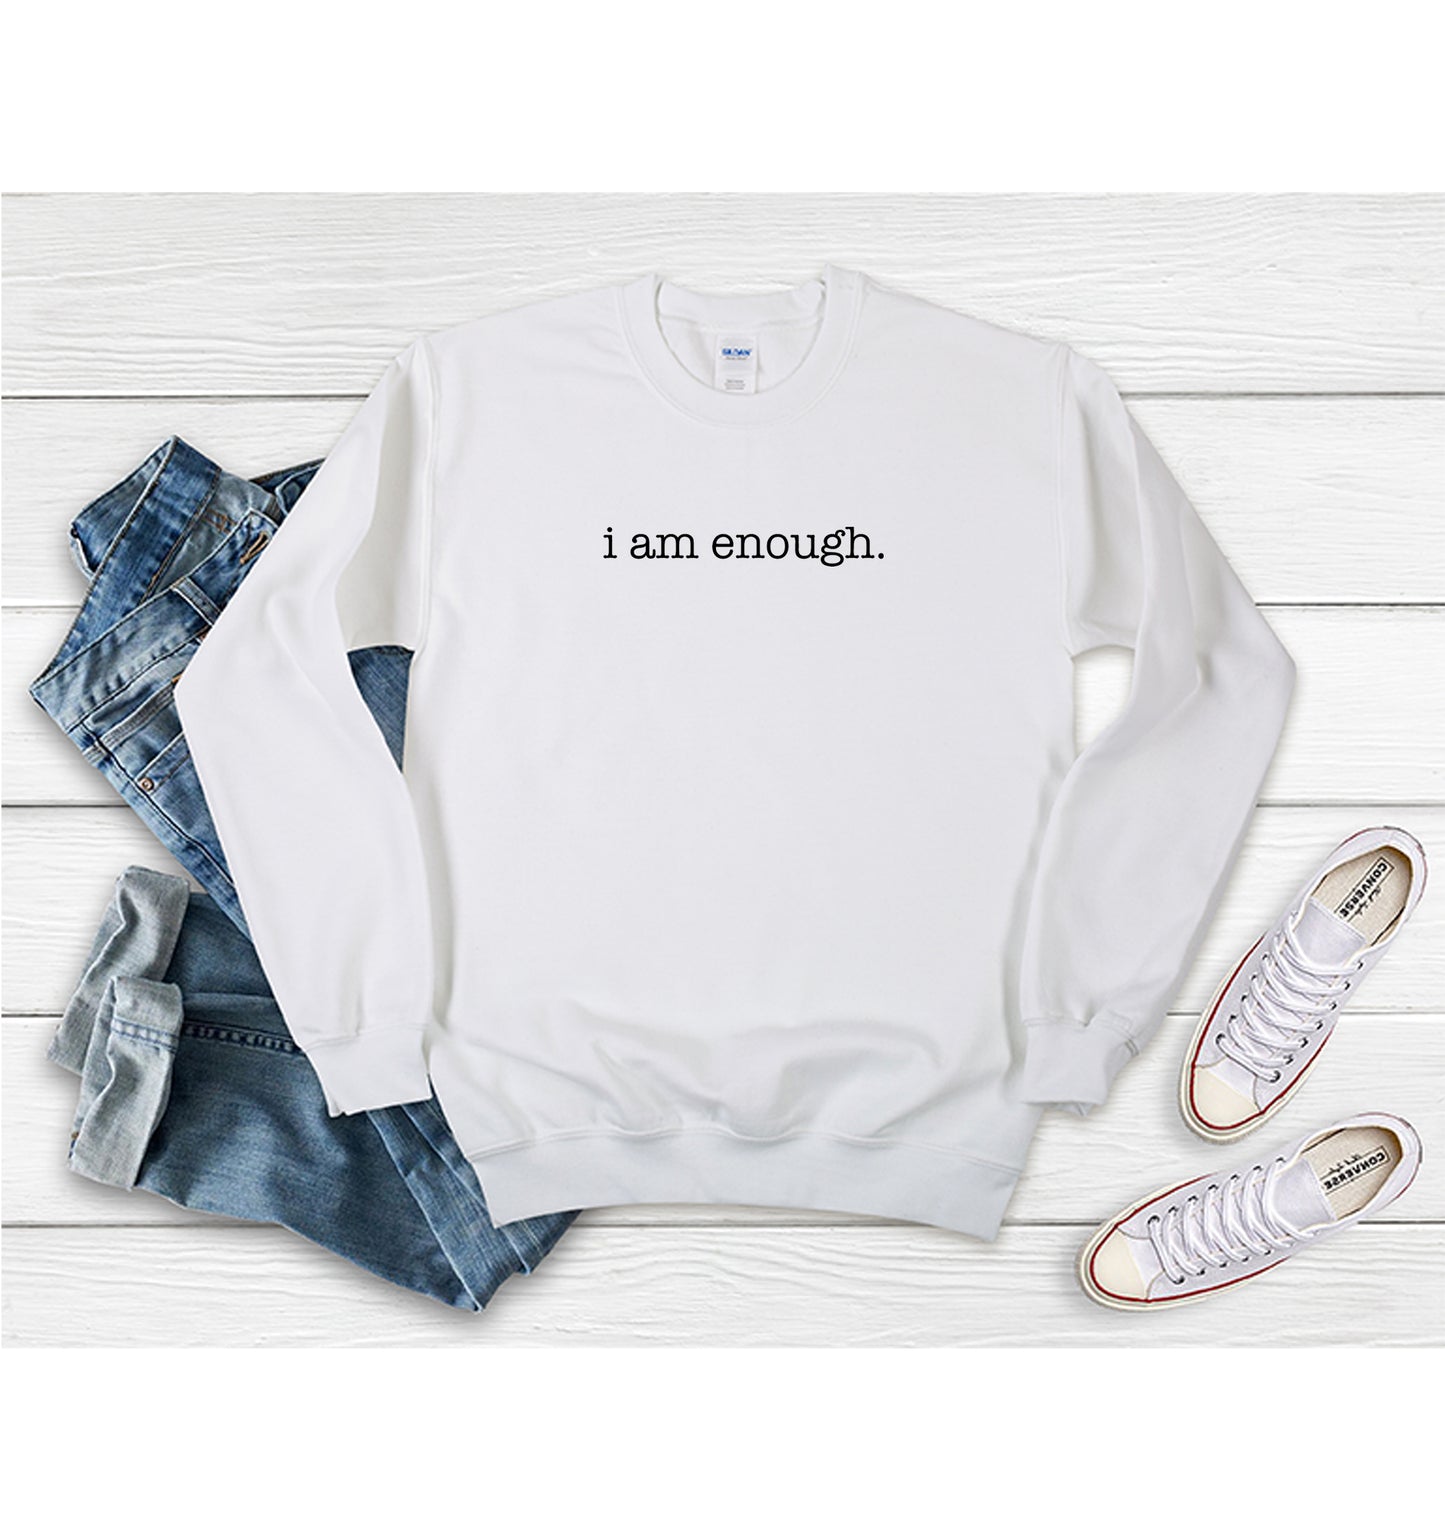 i am enough - Affirmation Shirt - Sweatshirt